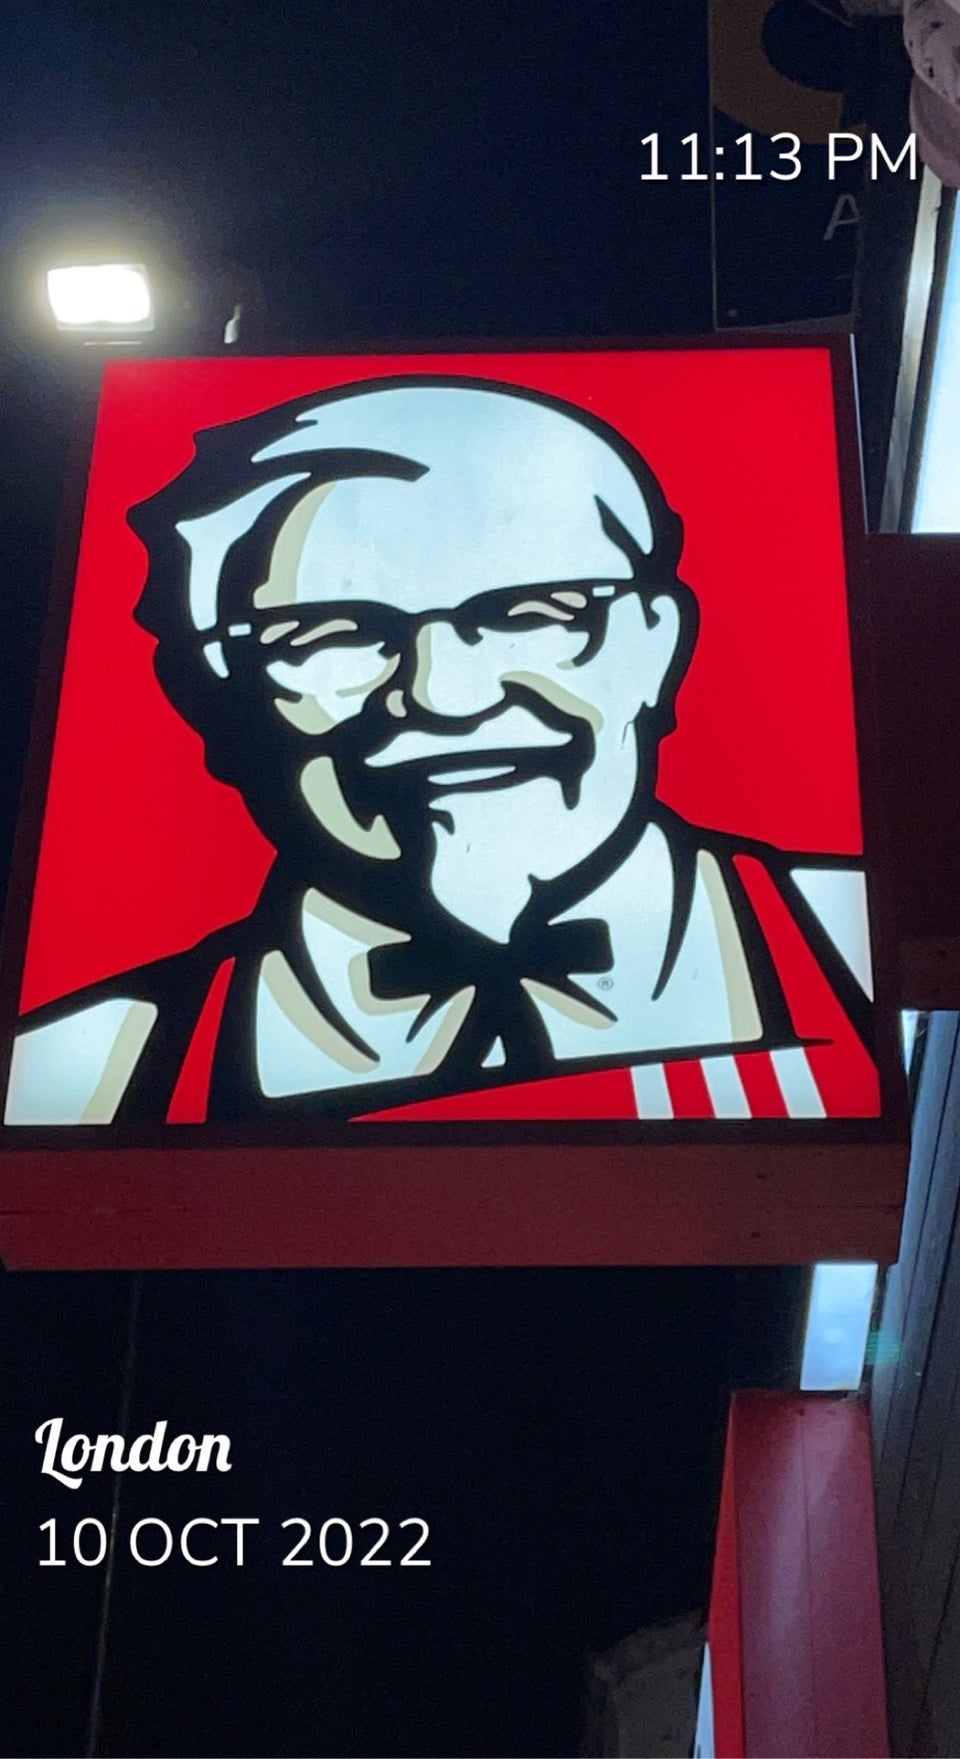 KFC Archway - Holloway Road